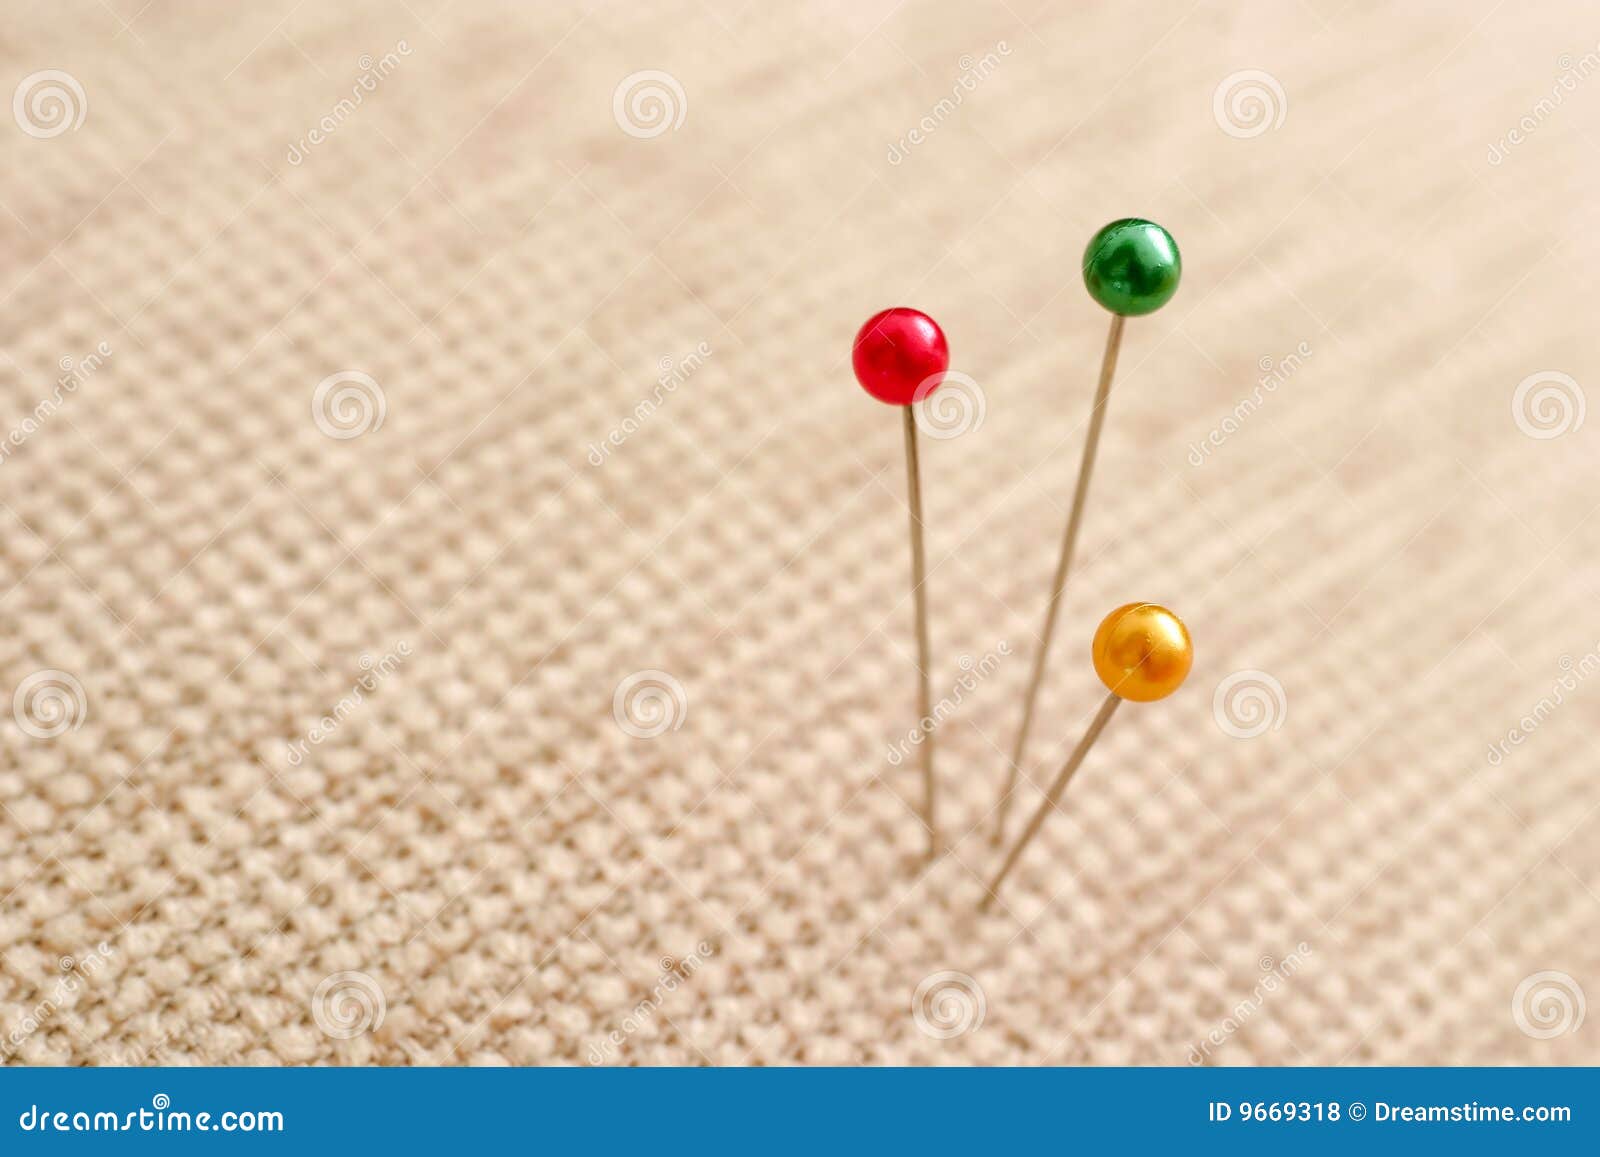 Three Straight Pins stock photo. Image of equipment, bead - 9669318